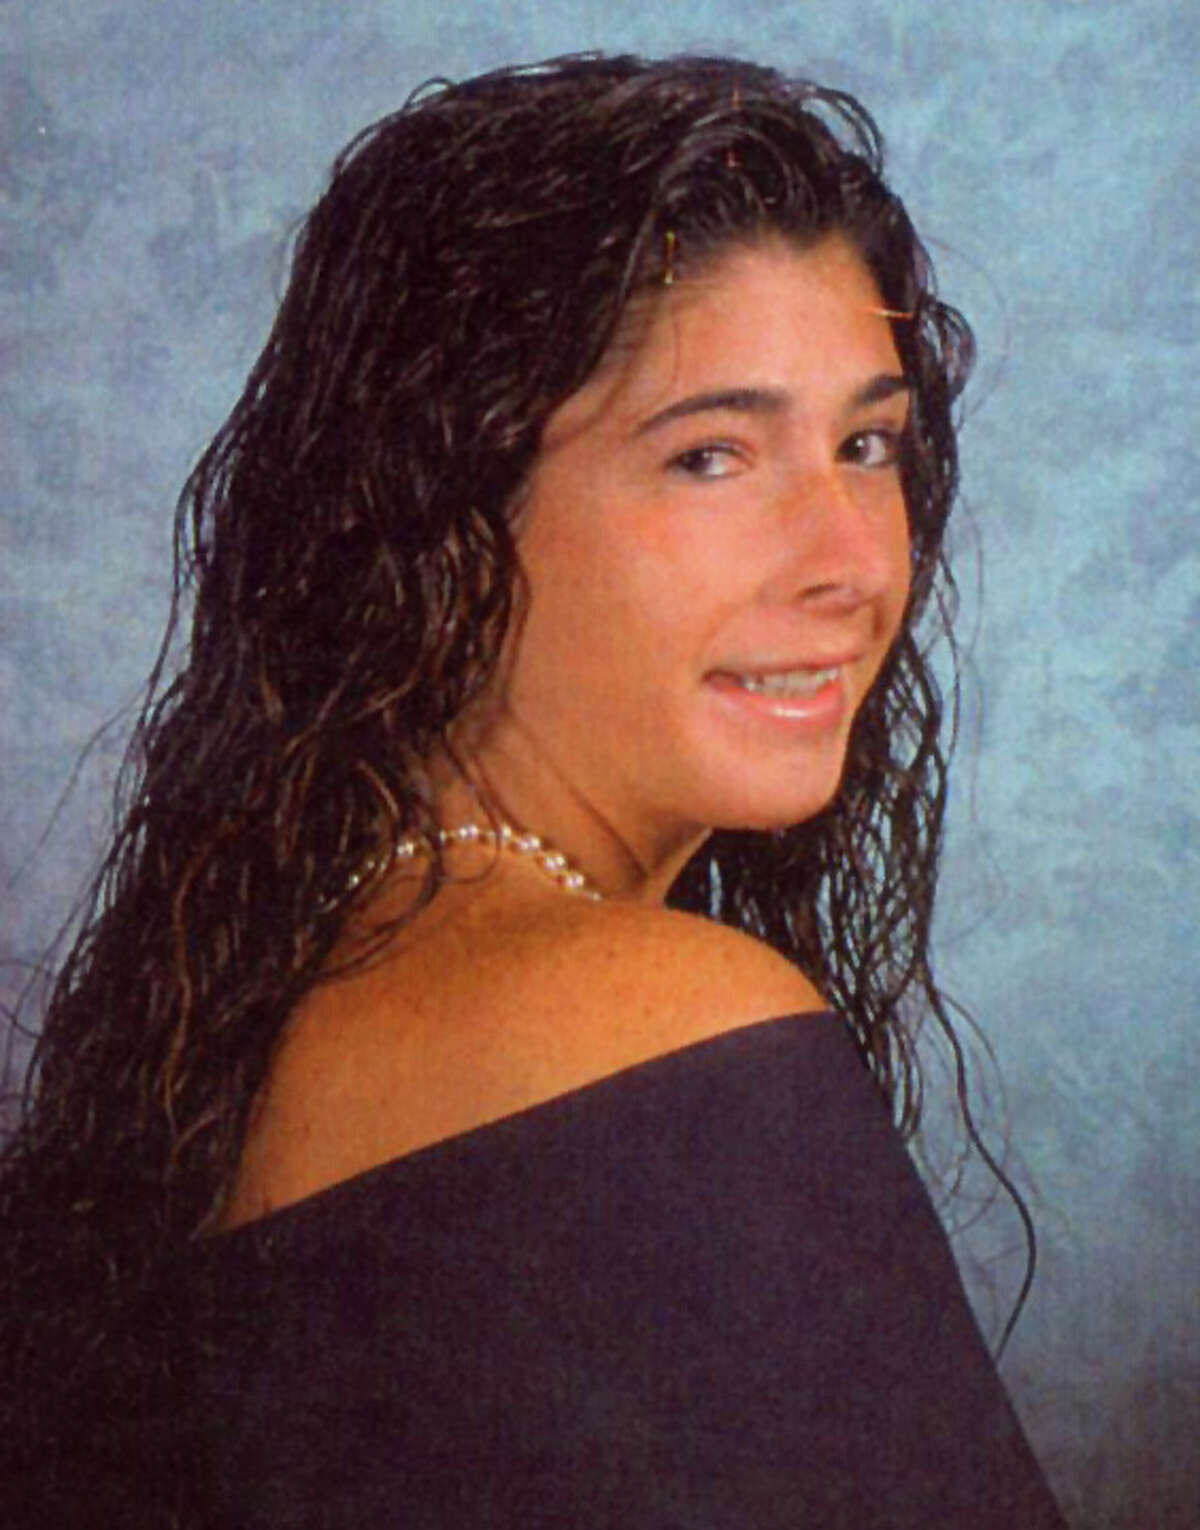 2007 Westhill High School graduation photo of Rachel Sottosanti.